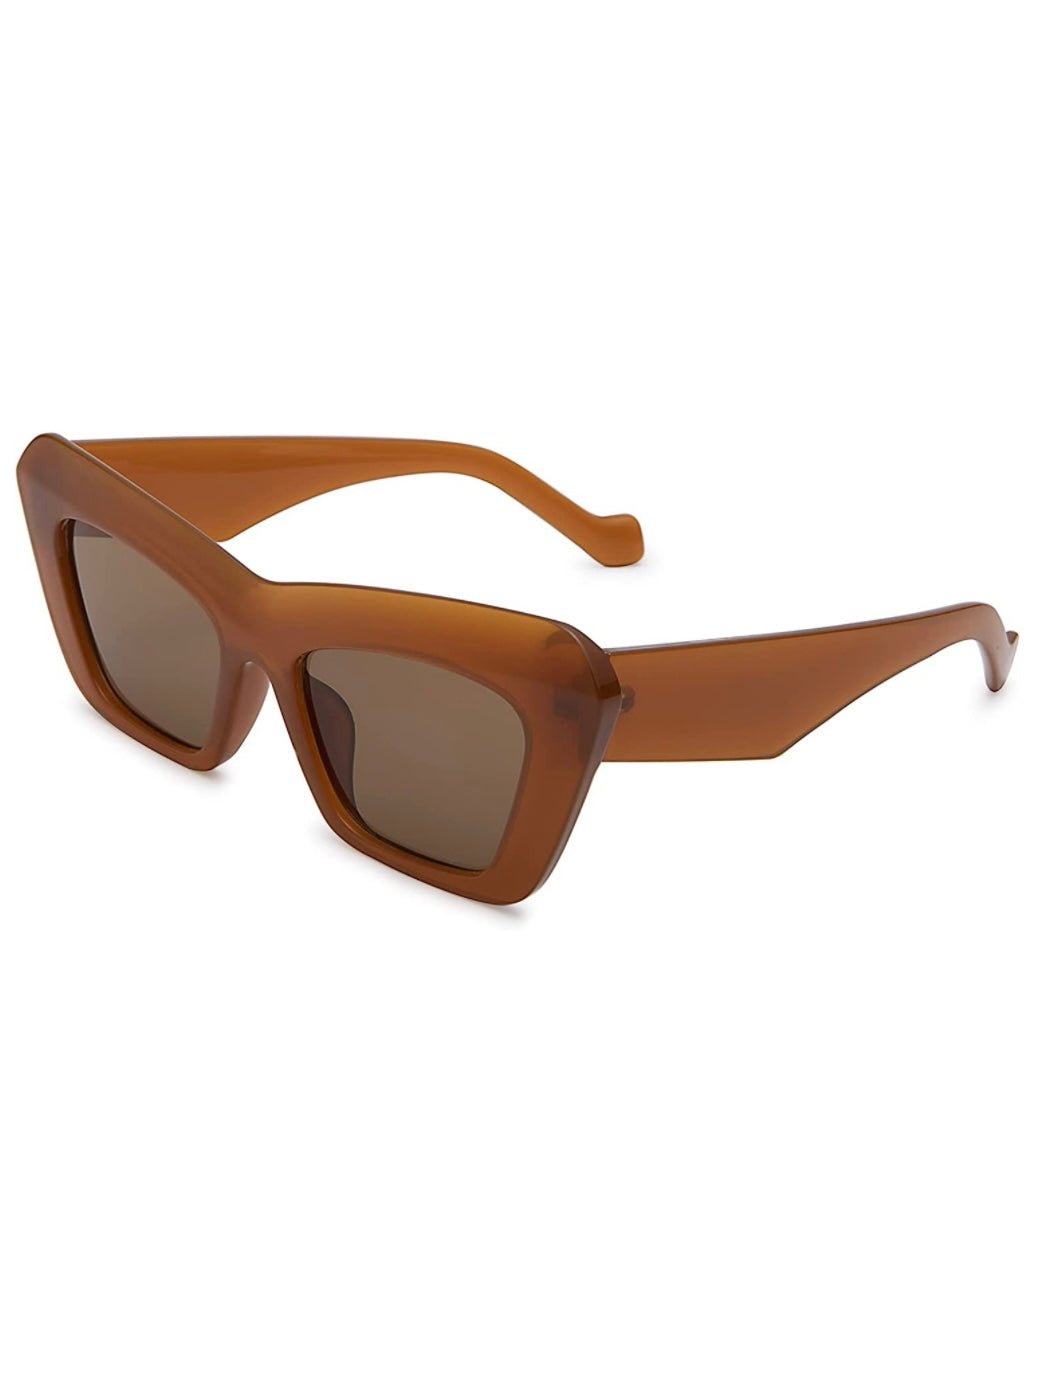 Brown cat eye retro sunglasses - Wapas